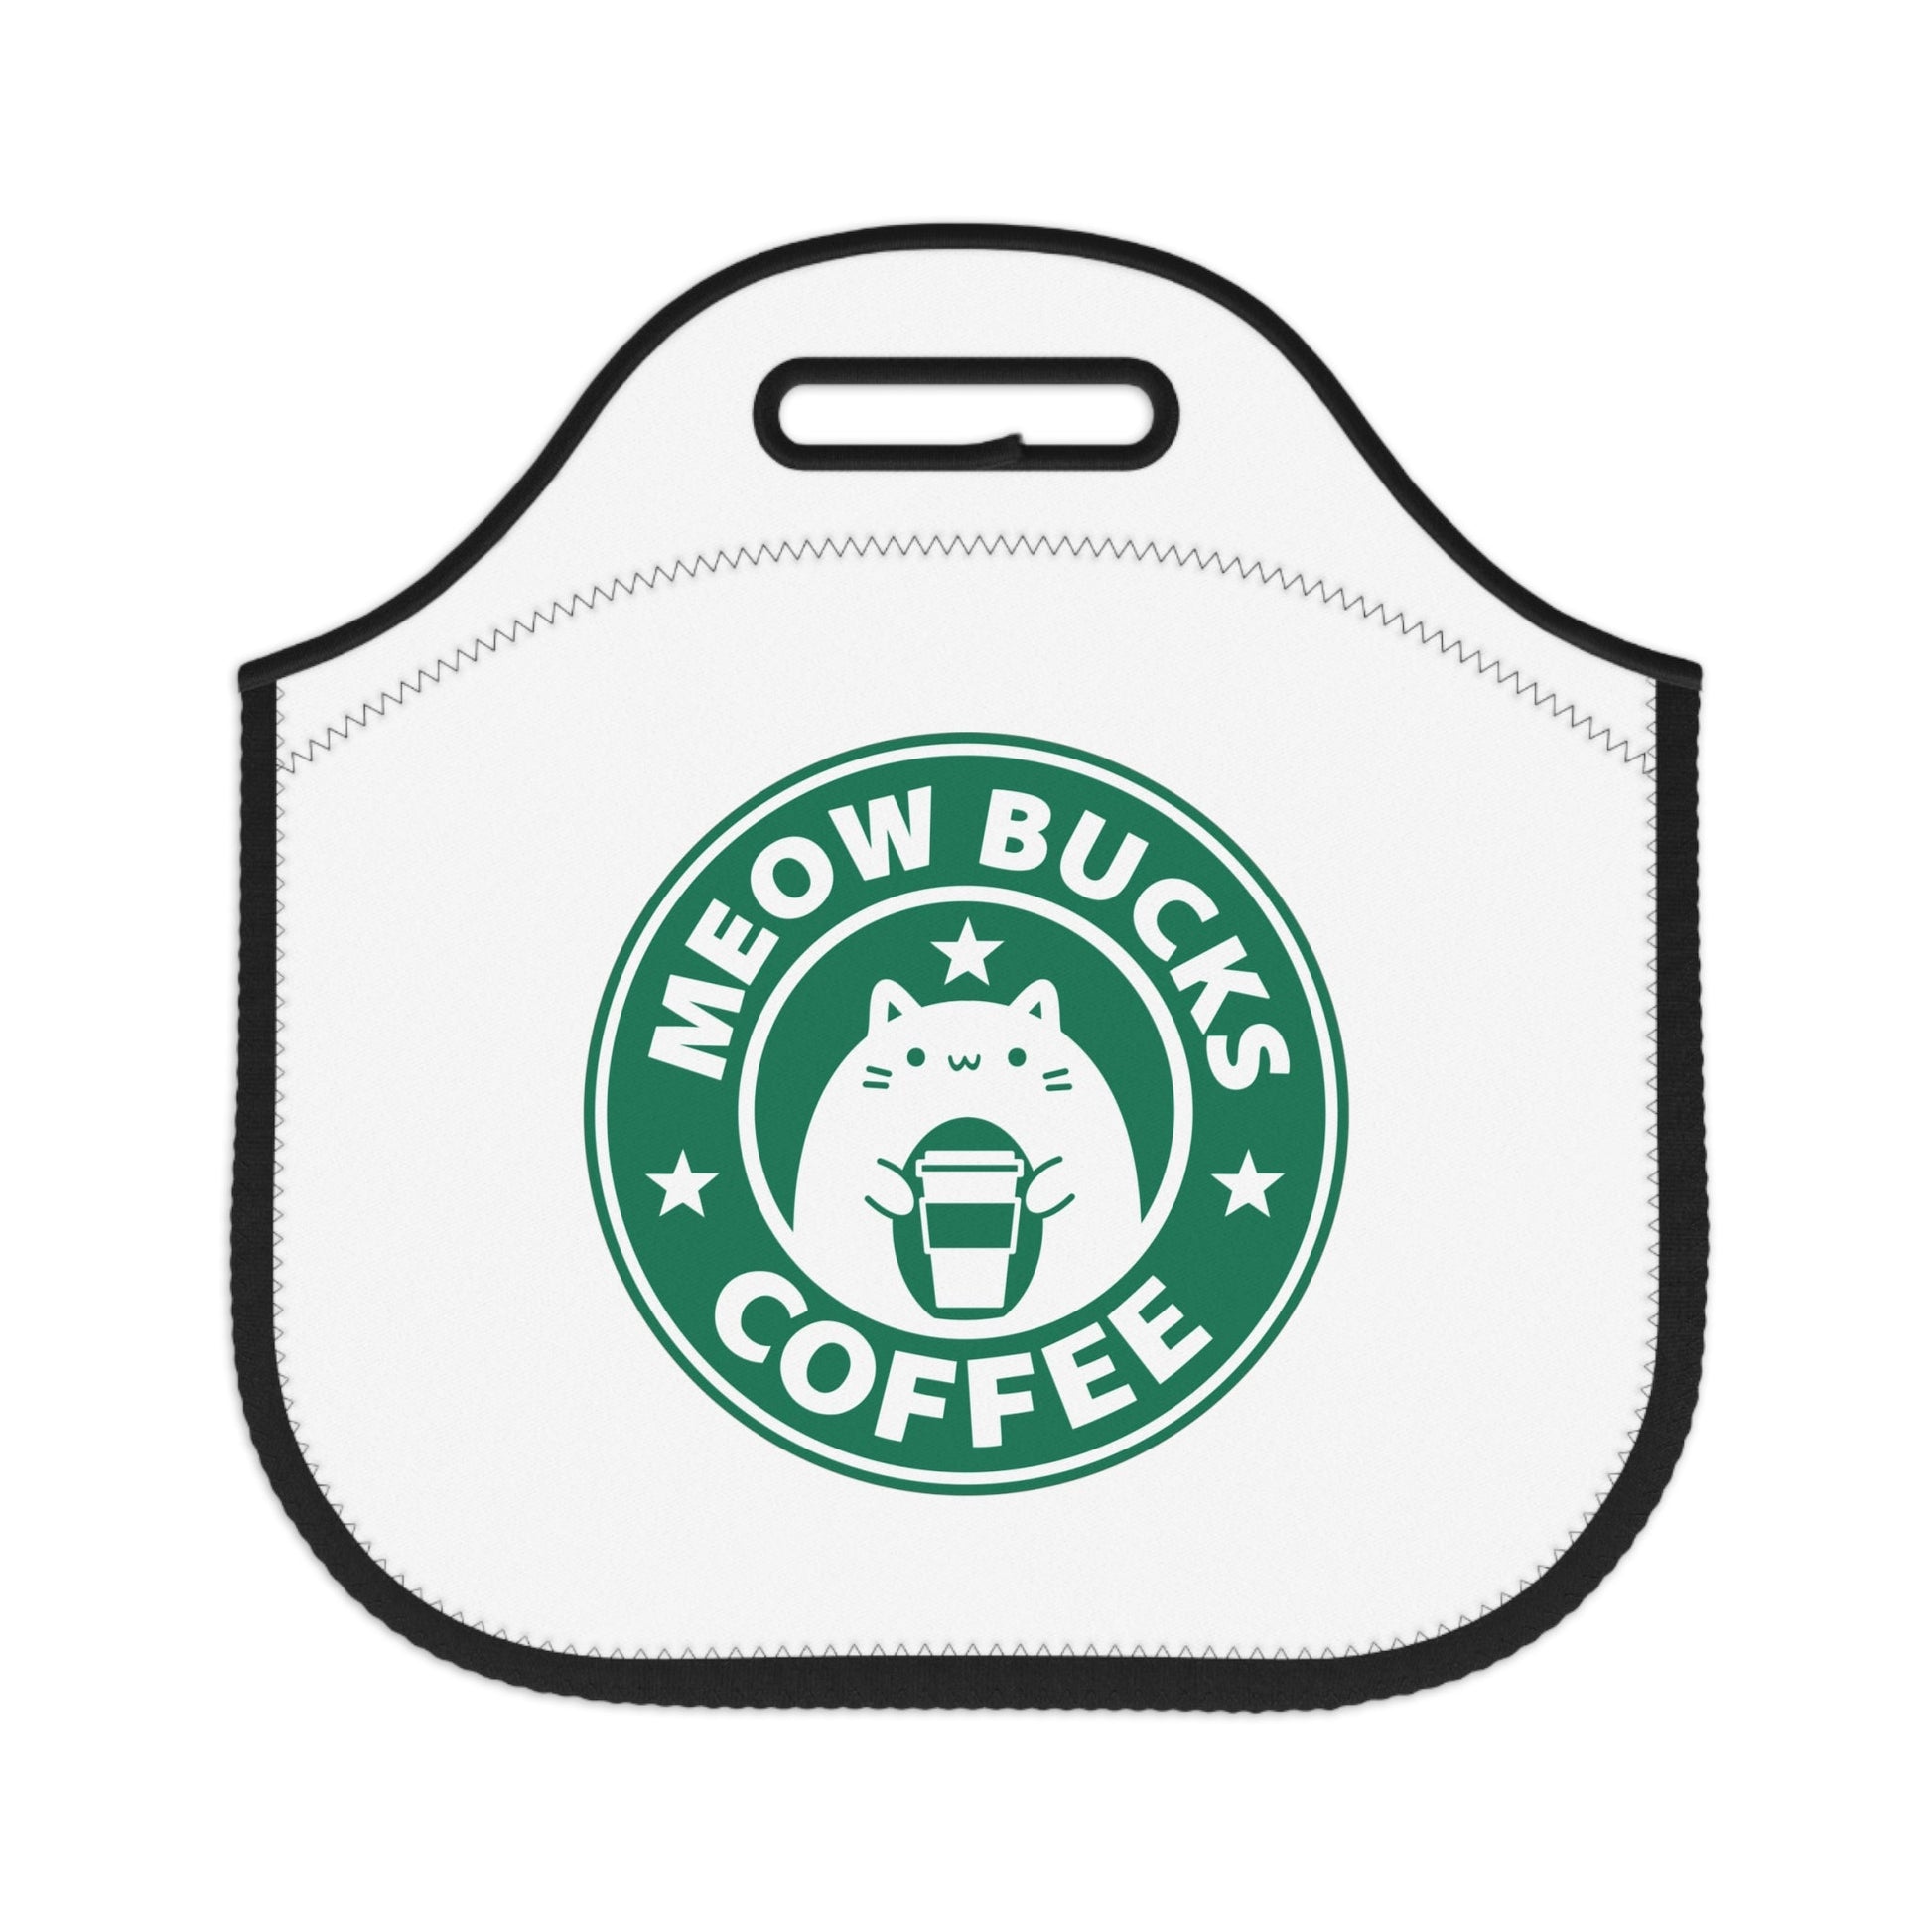 Meow Bucks Neoprene Lunch Bag - Bags - Epileptic Al’s Shop